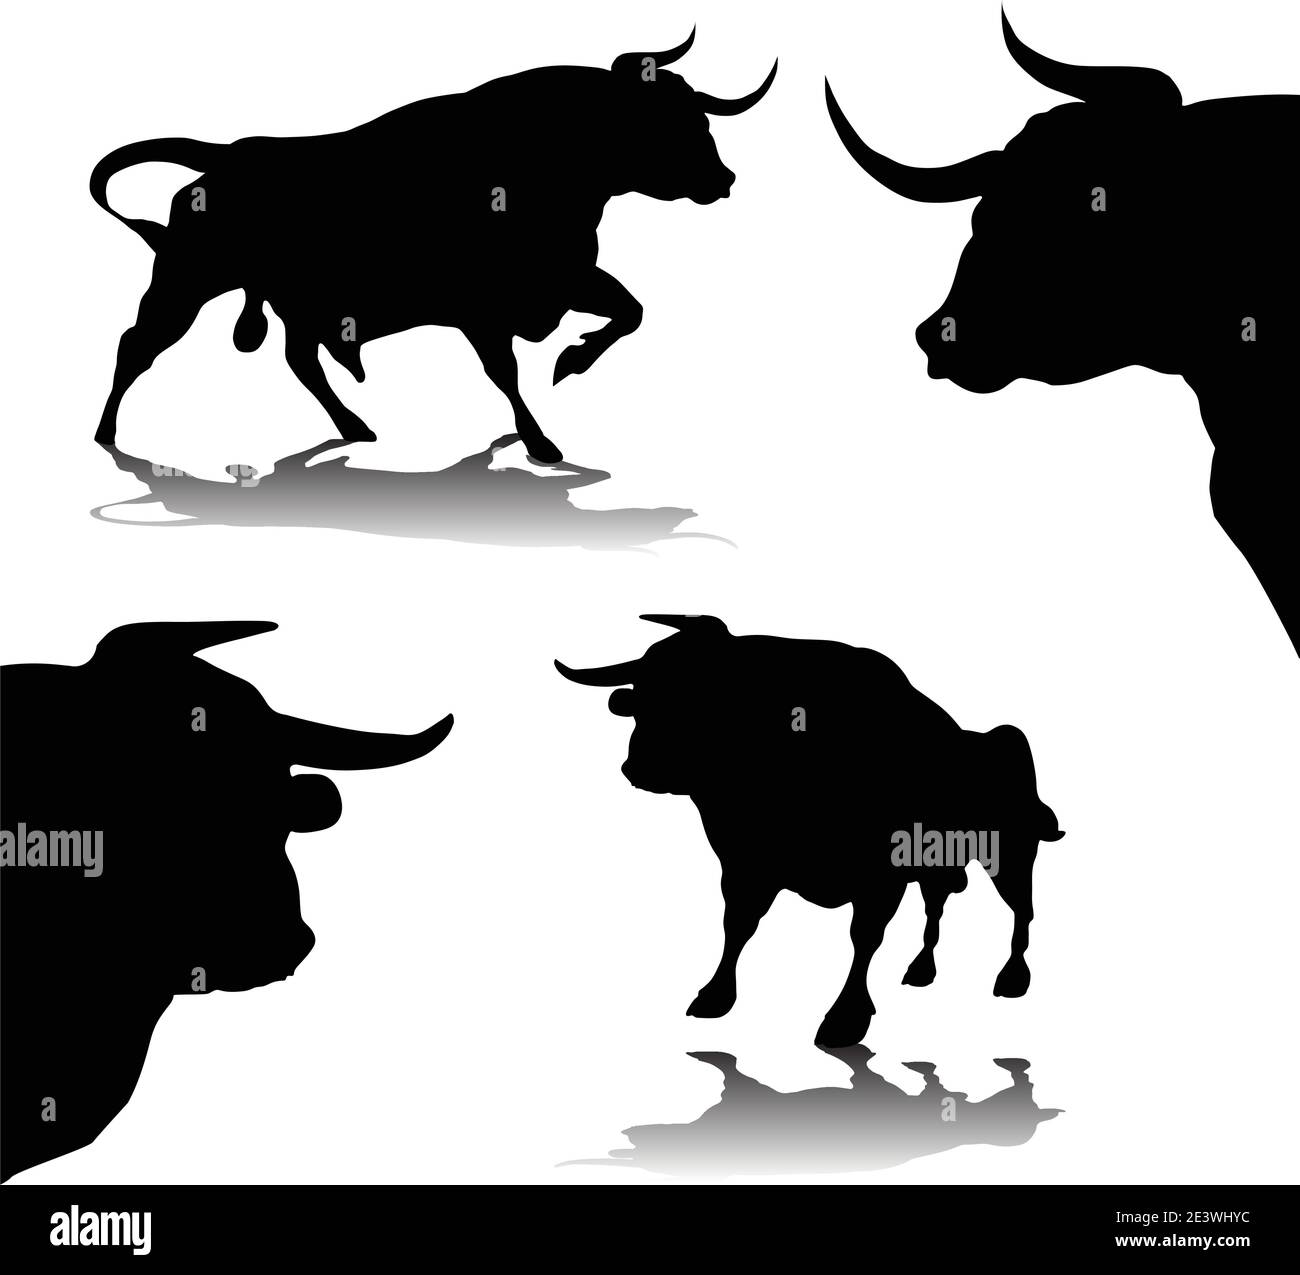 Bulls silhouettes isolated vector illustration Stock Vector